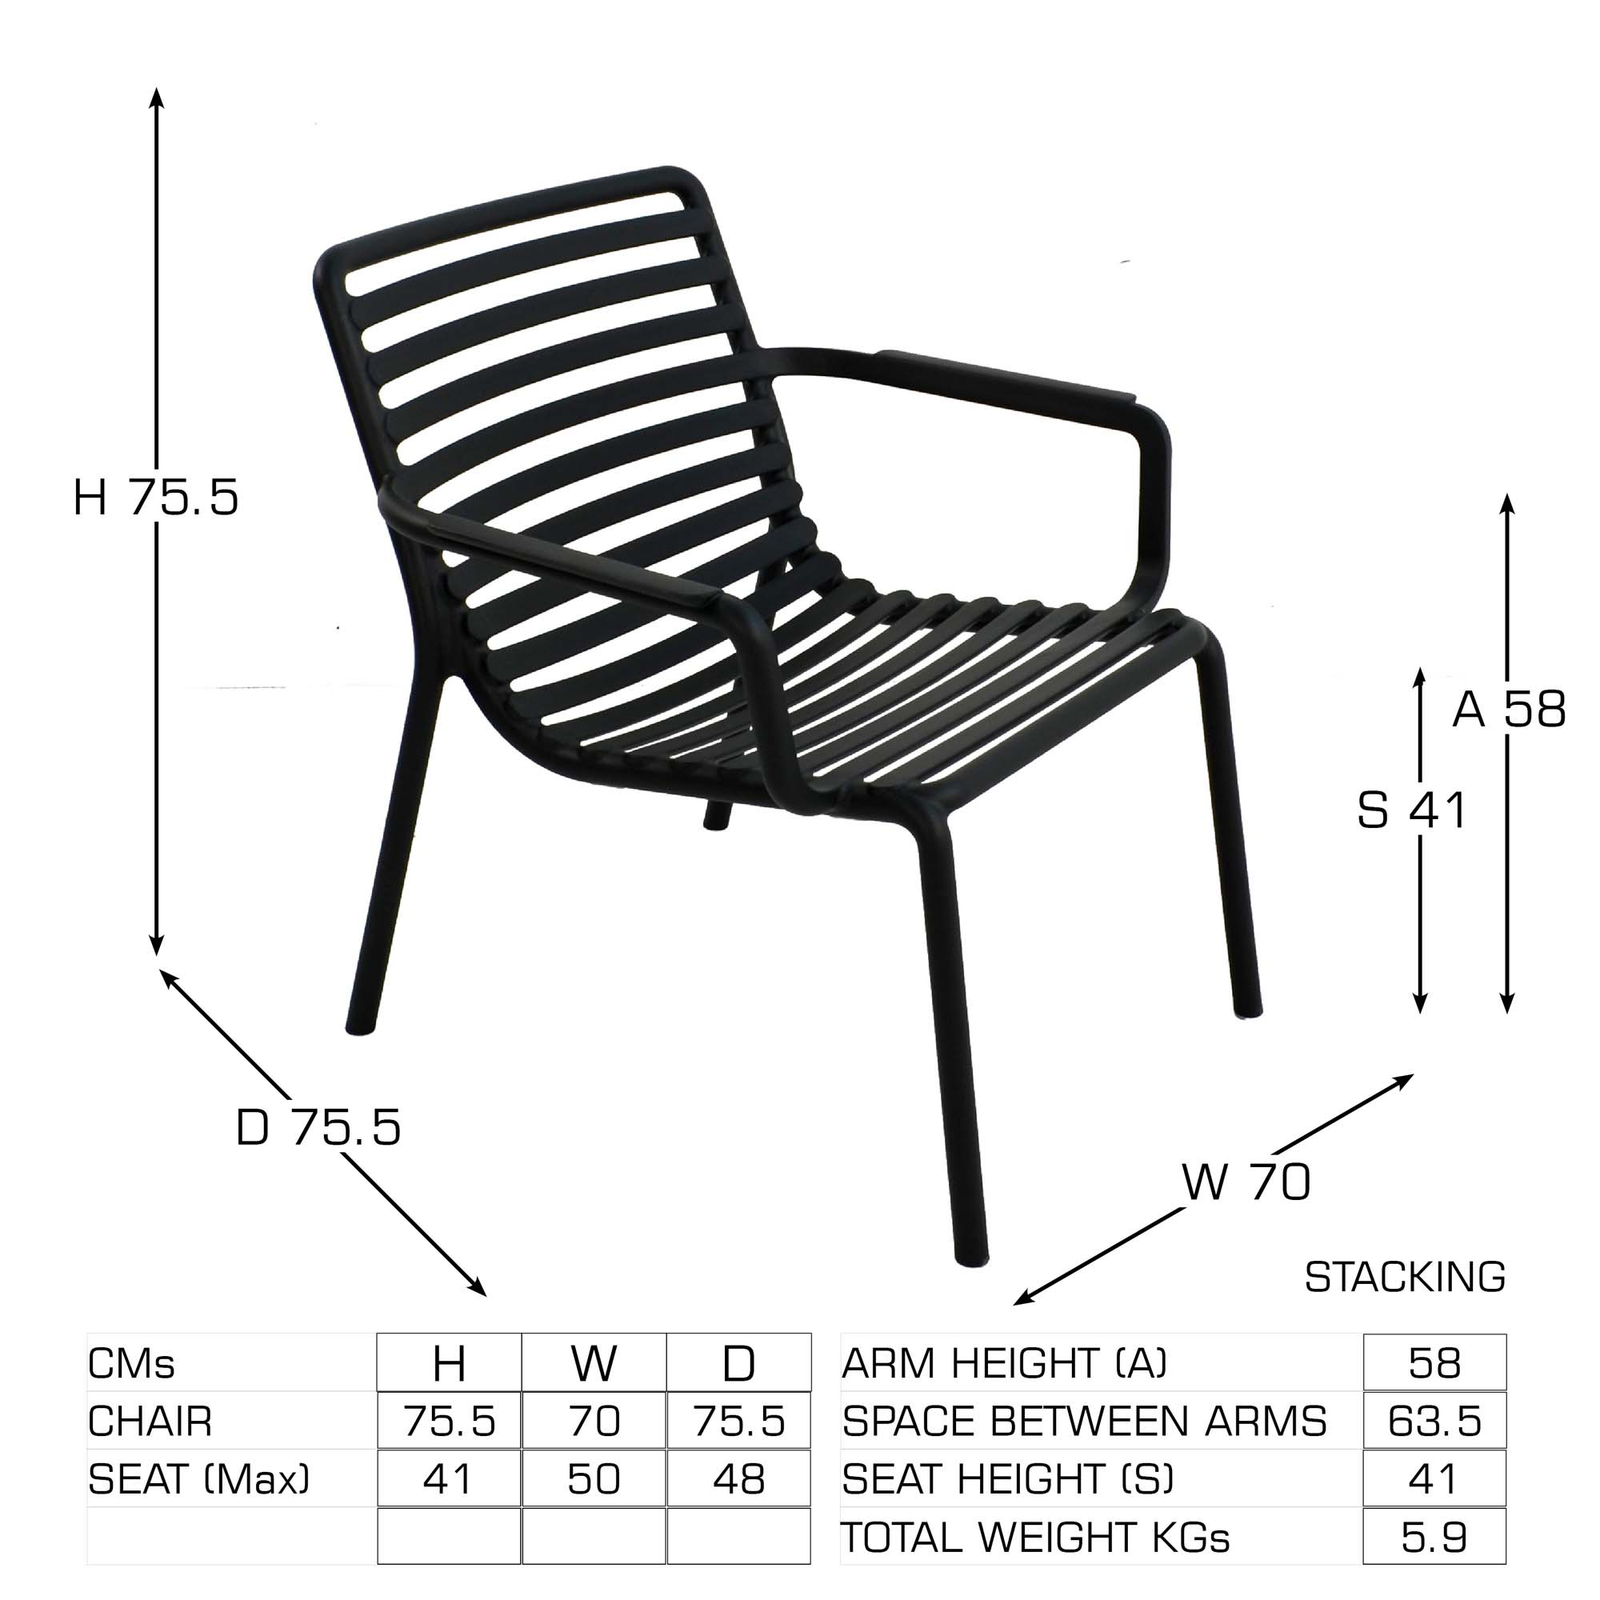 Nardi Doga Relax Garden Chair Anthracite Grey (Pack of 2) Chairs Nardi   